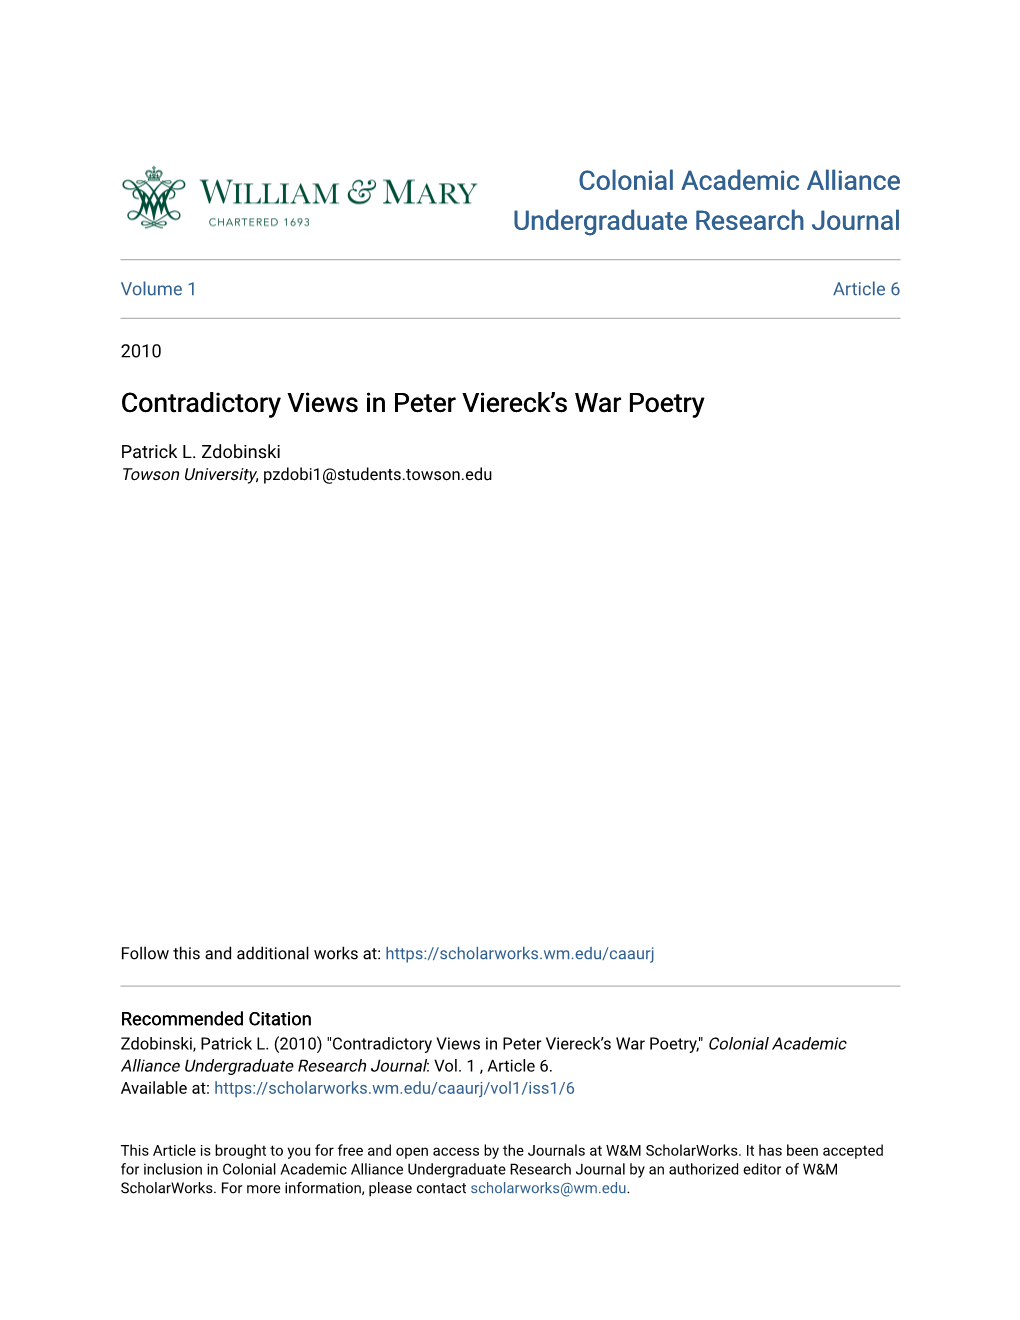 Contradictory Views in Peter Viereck's War Poetry